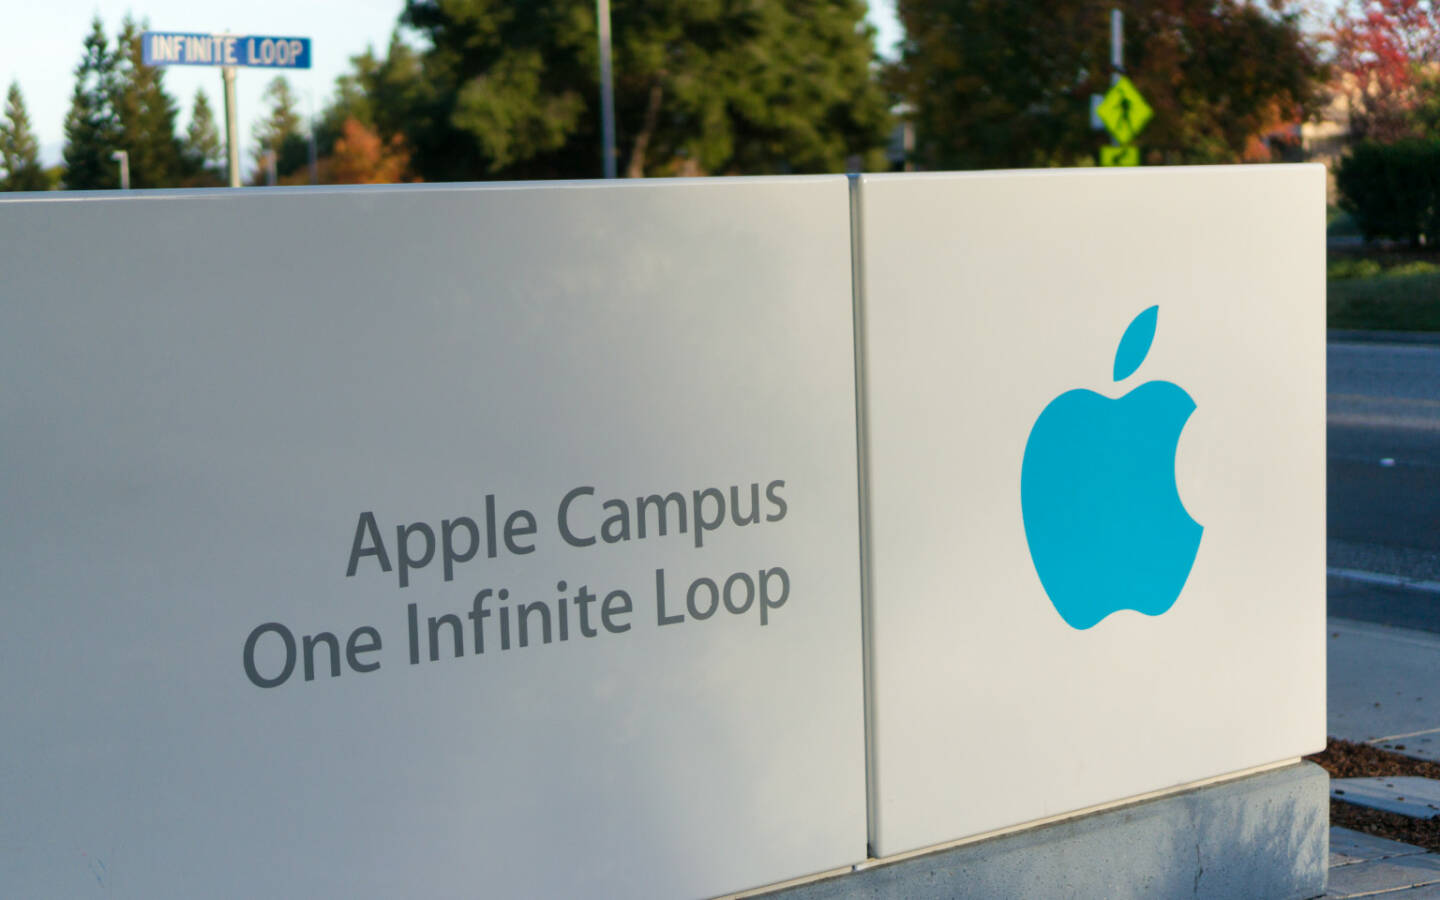 Apple headquarters, Infinite loop, Cupertino <a href=http://www.shutterstock.com/gallery-2633281p1.html?cr=00&pl=edit-00>Asif Islam</a> / <a href=http://www.shutterstock.com/editorial?cr=00&pl=edit-00>Shutterstock.com</a>